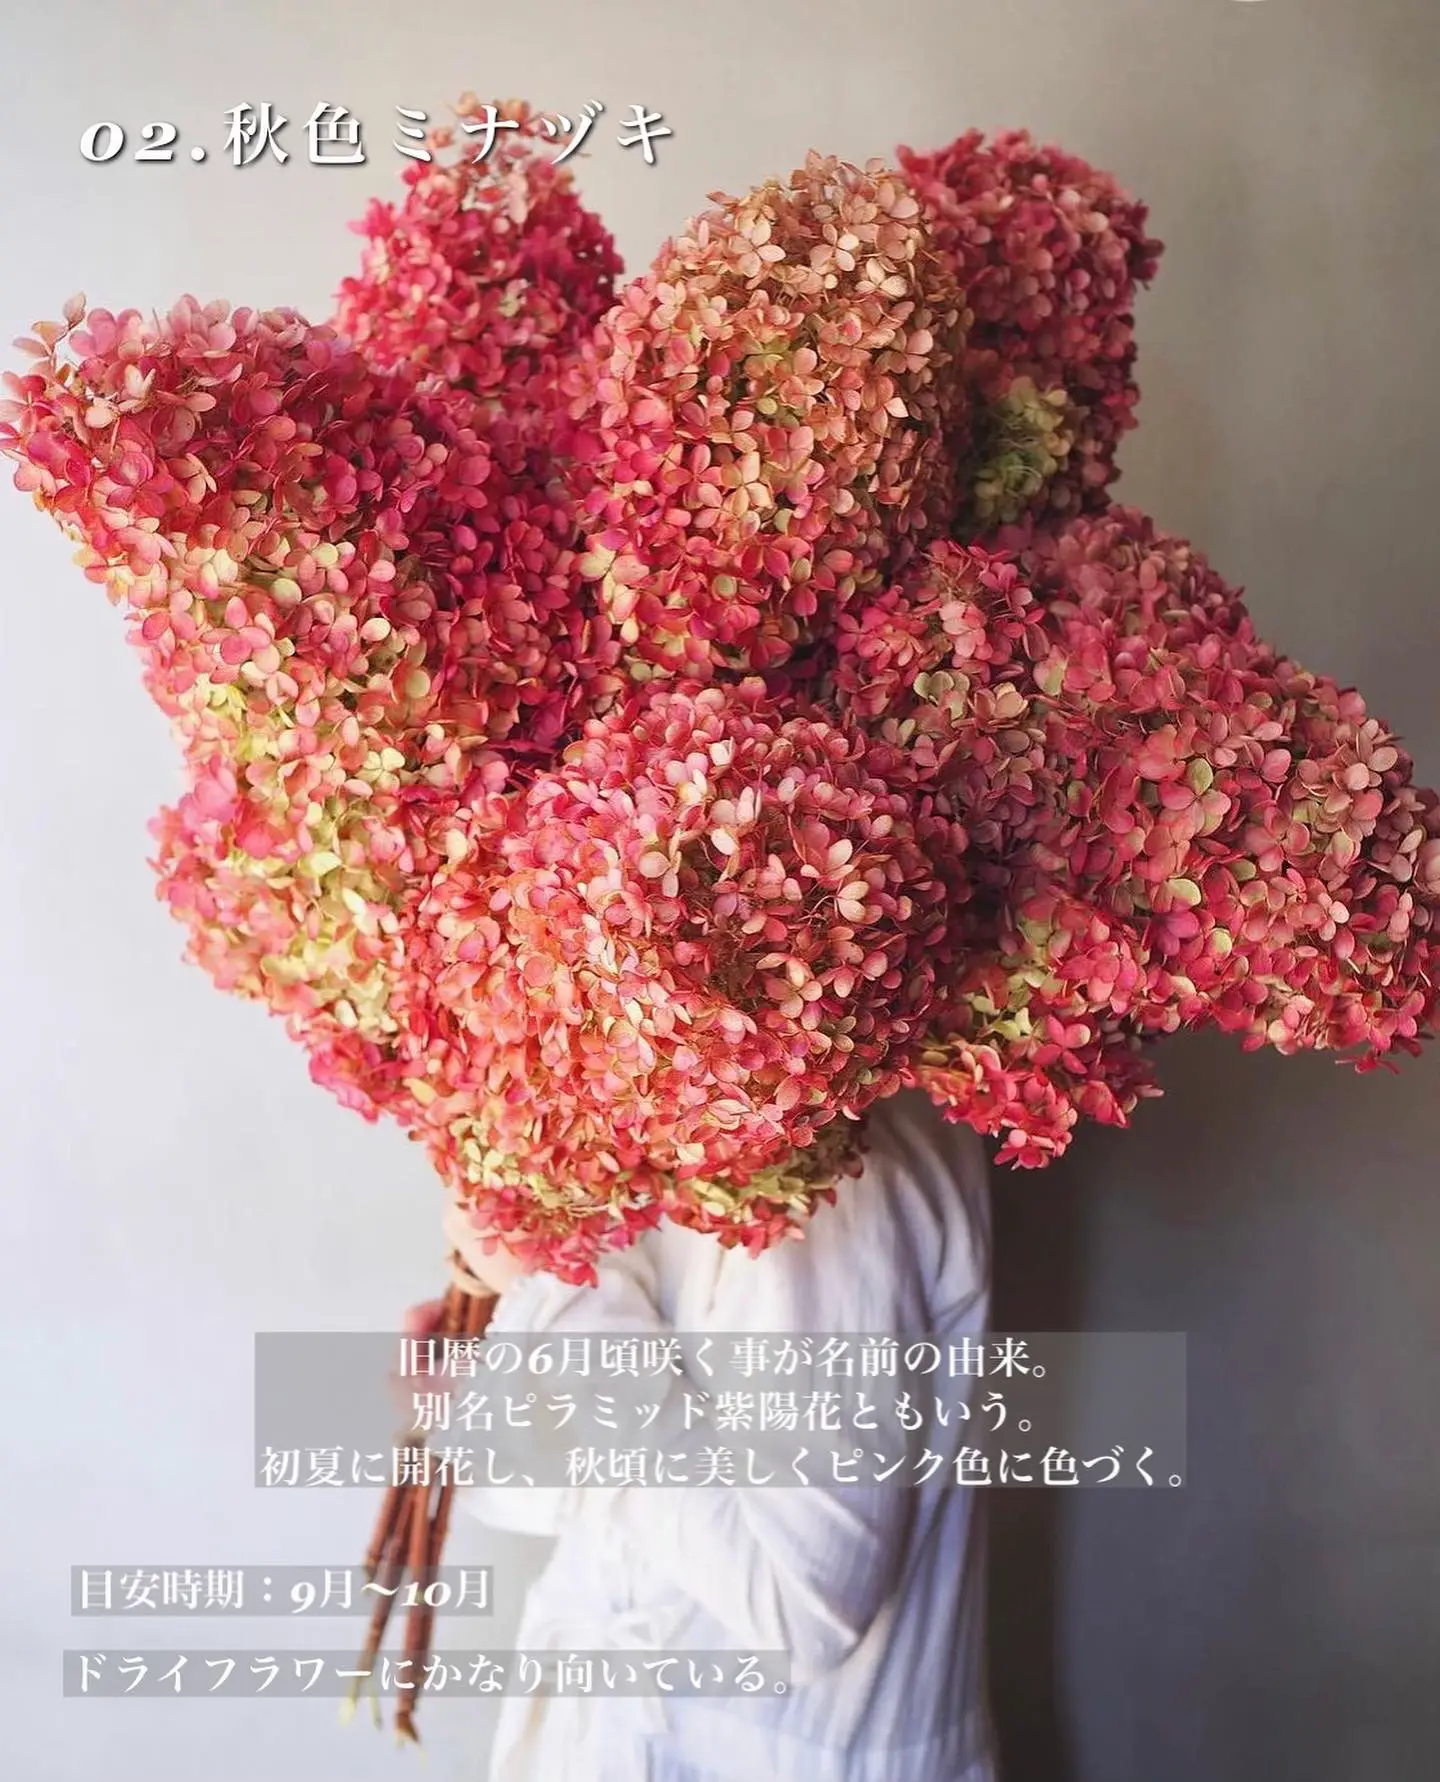 Flowers As A Gift from God - Lemon8検索